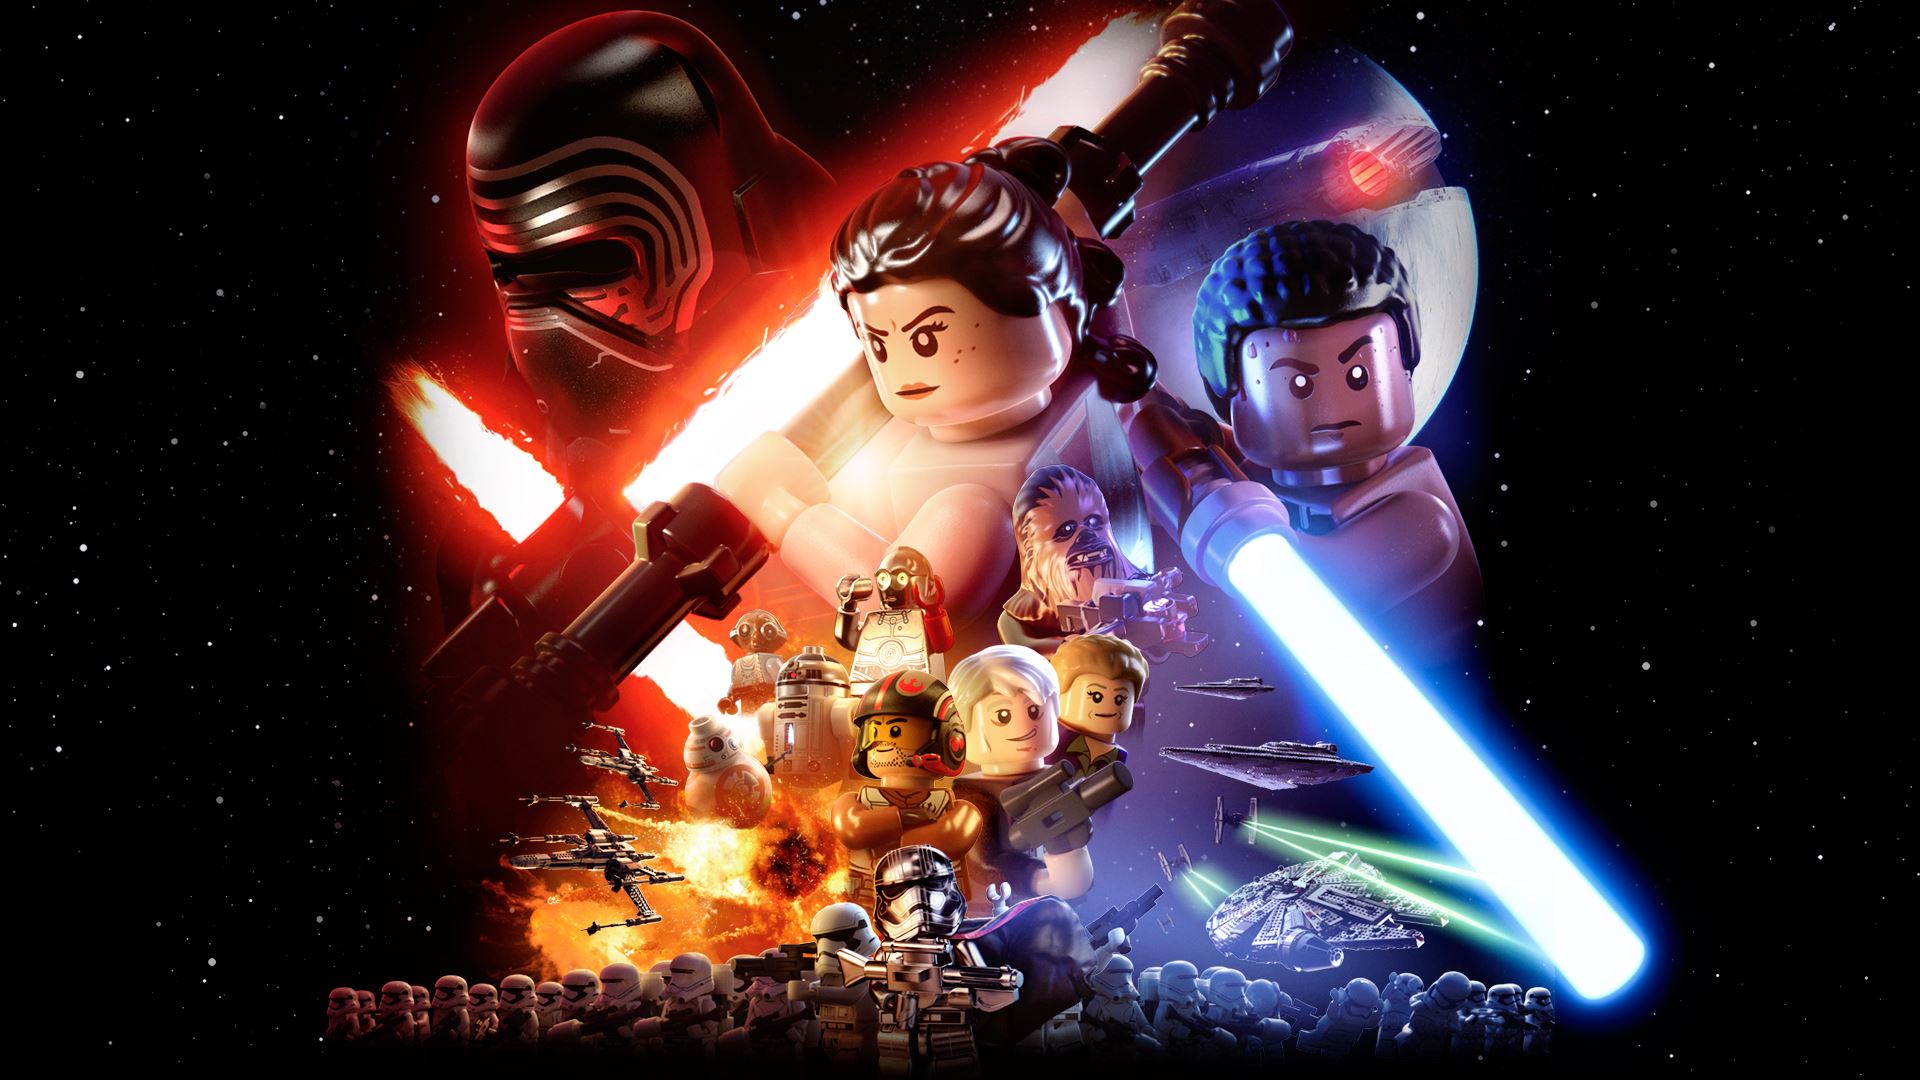 LEGO Star Wars: The Force Awakens HD Wallpaperwallpaper.net